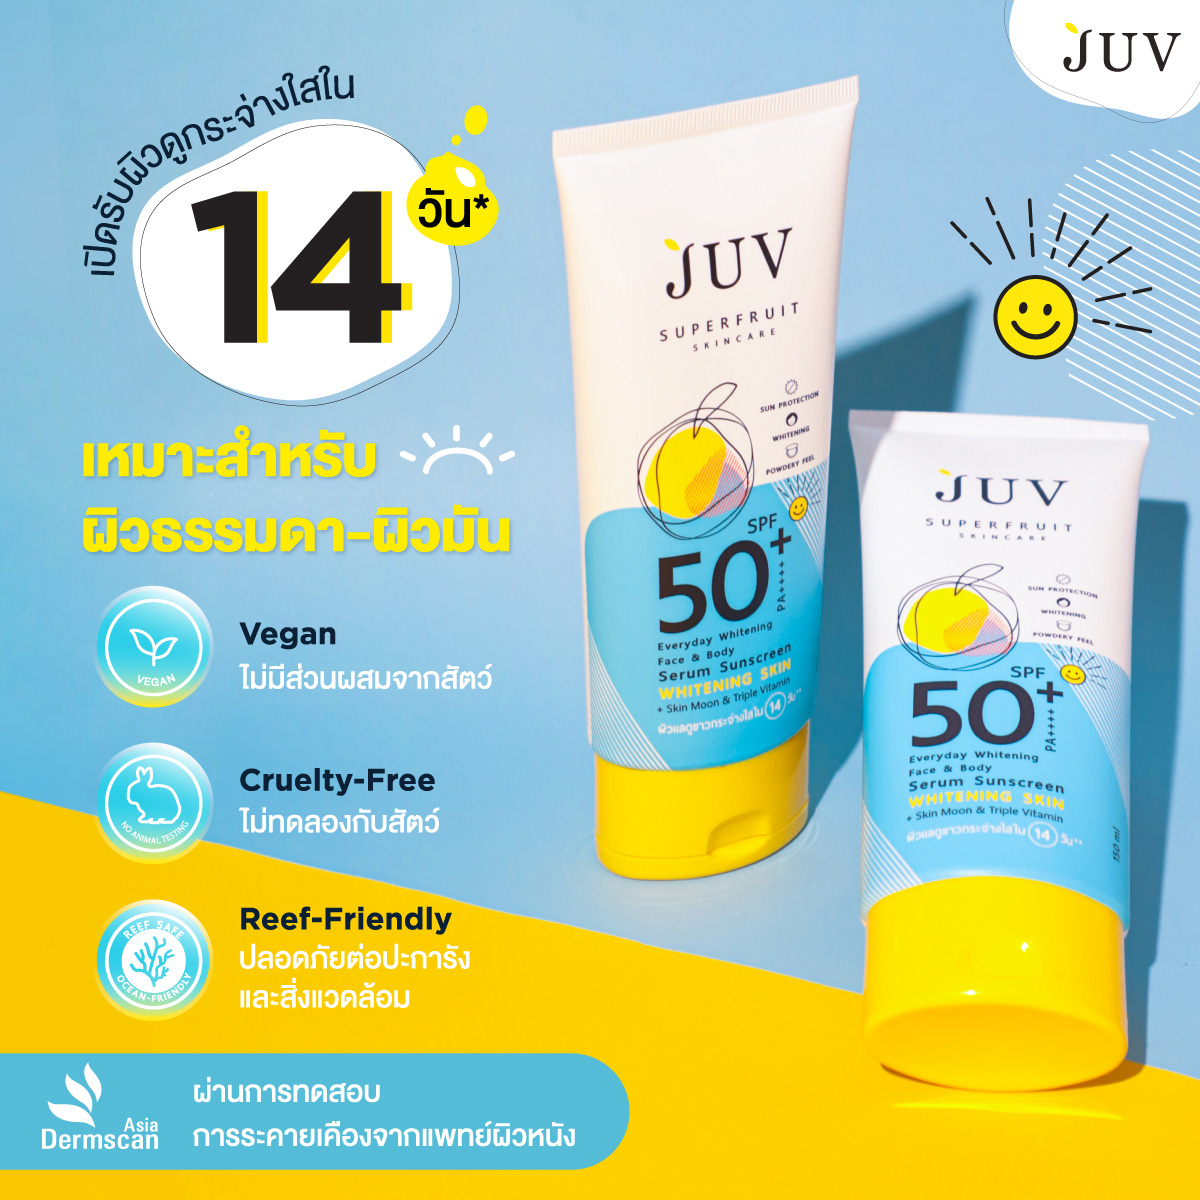 Juv Everyday Whitening Face & Body Serum Sunscreen SPF 50+ PA++++